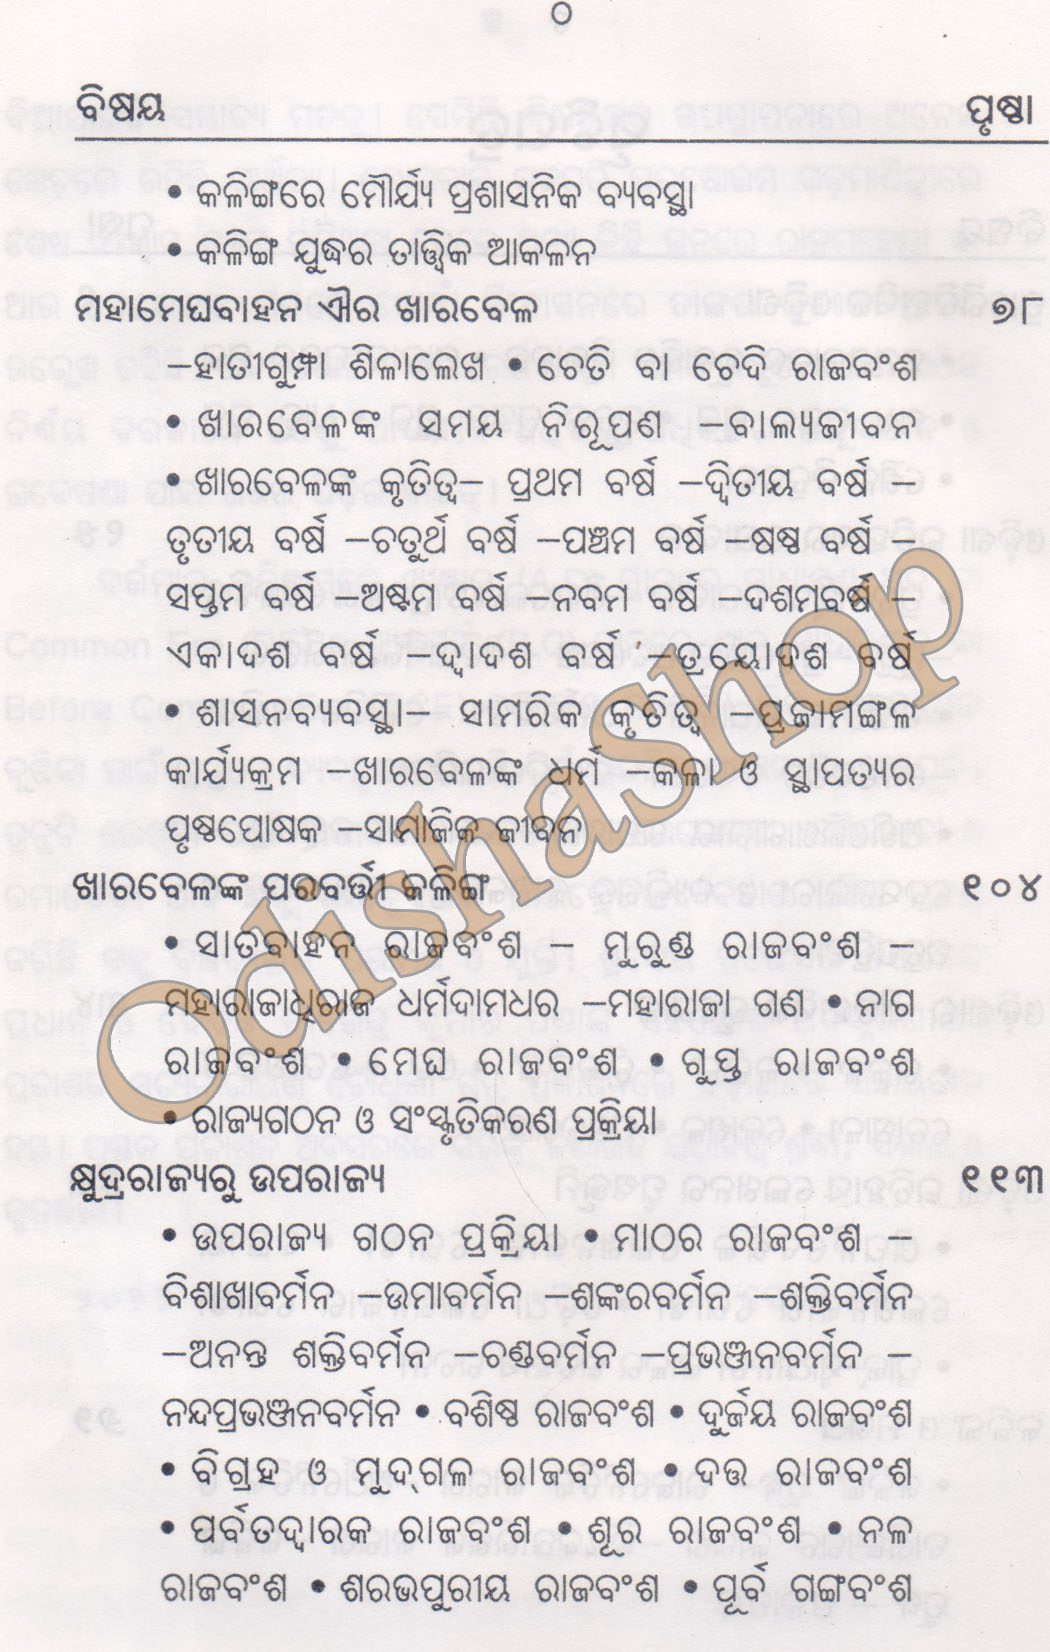 Odia spiritual book Odisha IthihasaFrom Odishashop